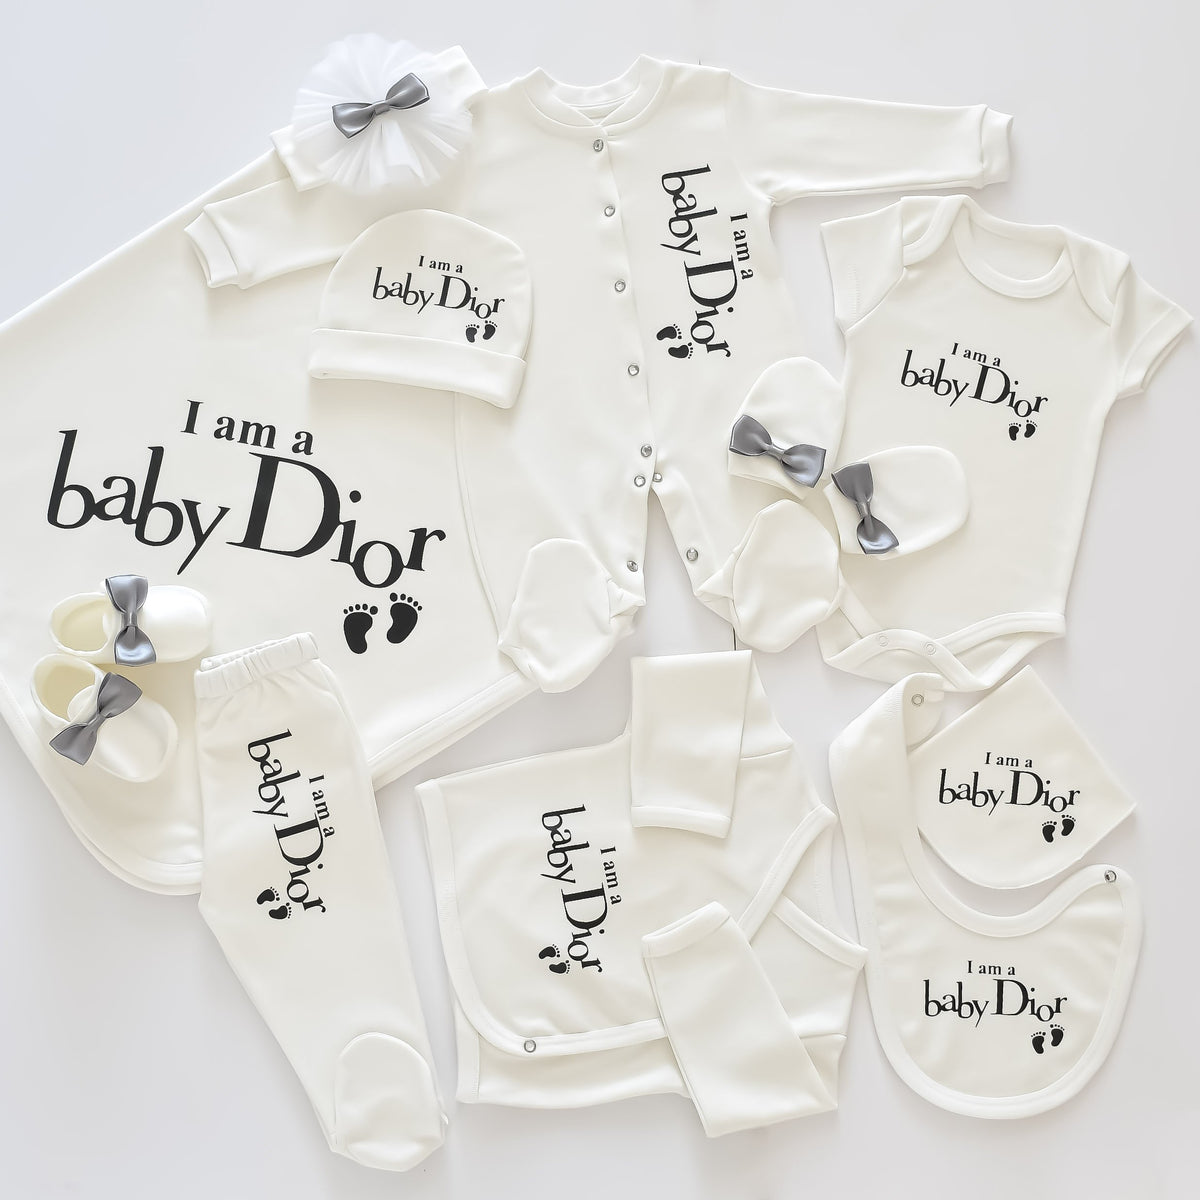 dior baby clothes online